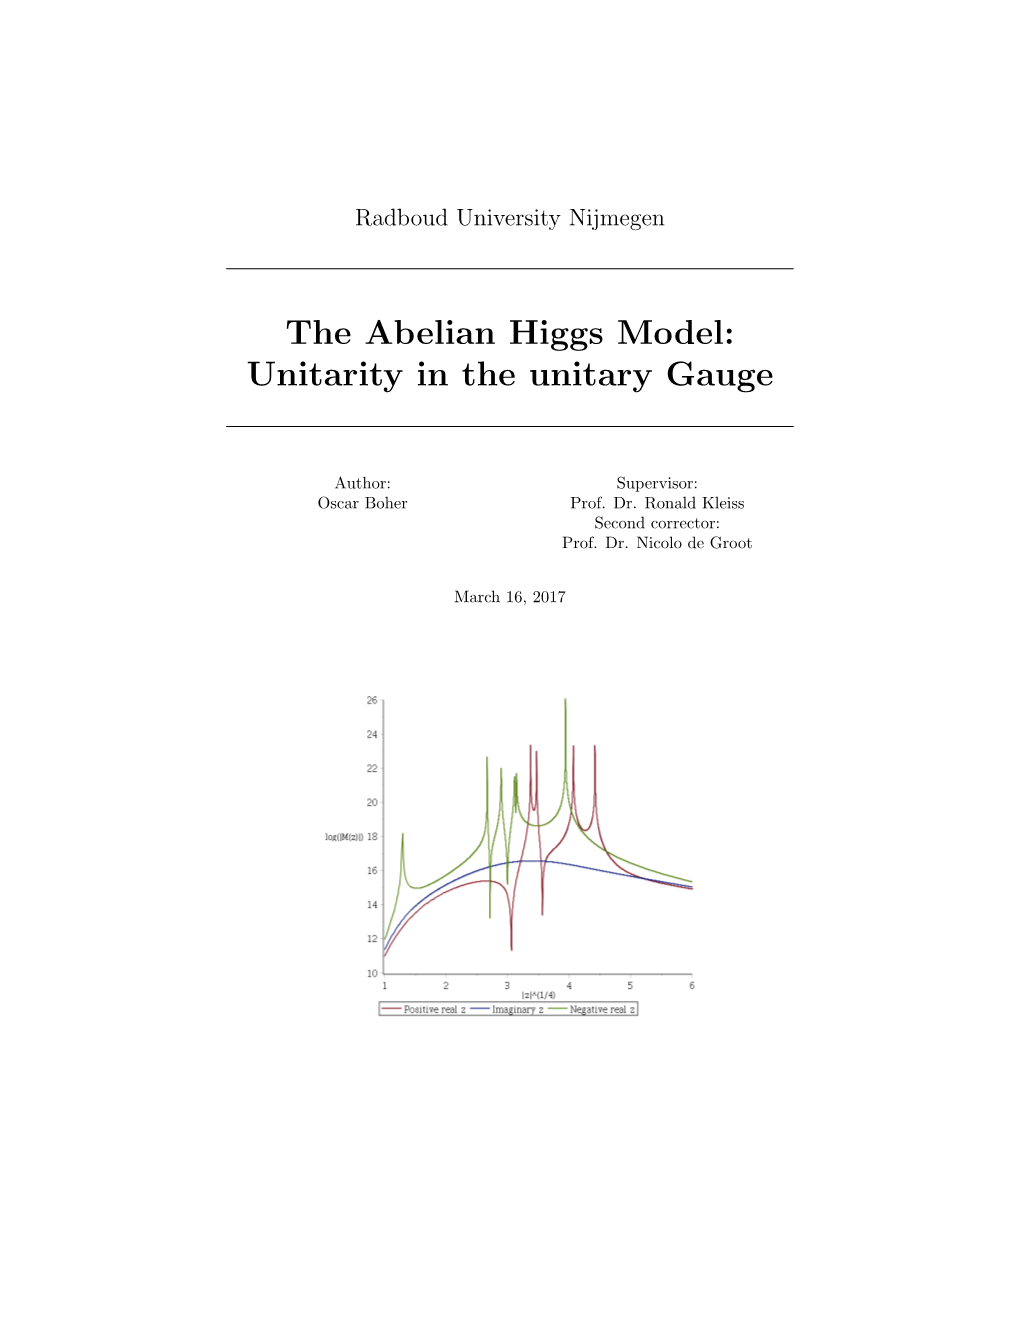 The Abelian Higgs Model: Unitarity in the Unitary Gauge